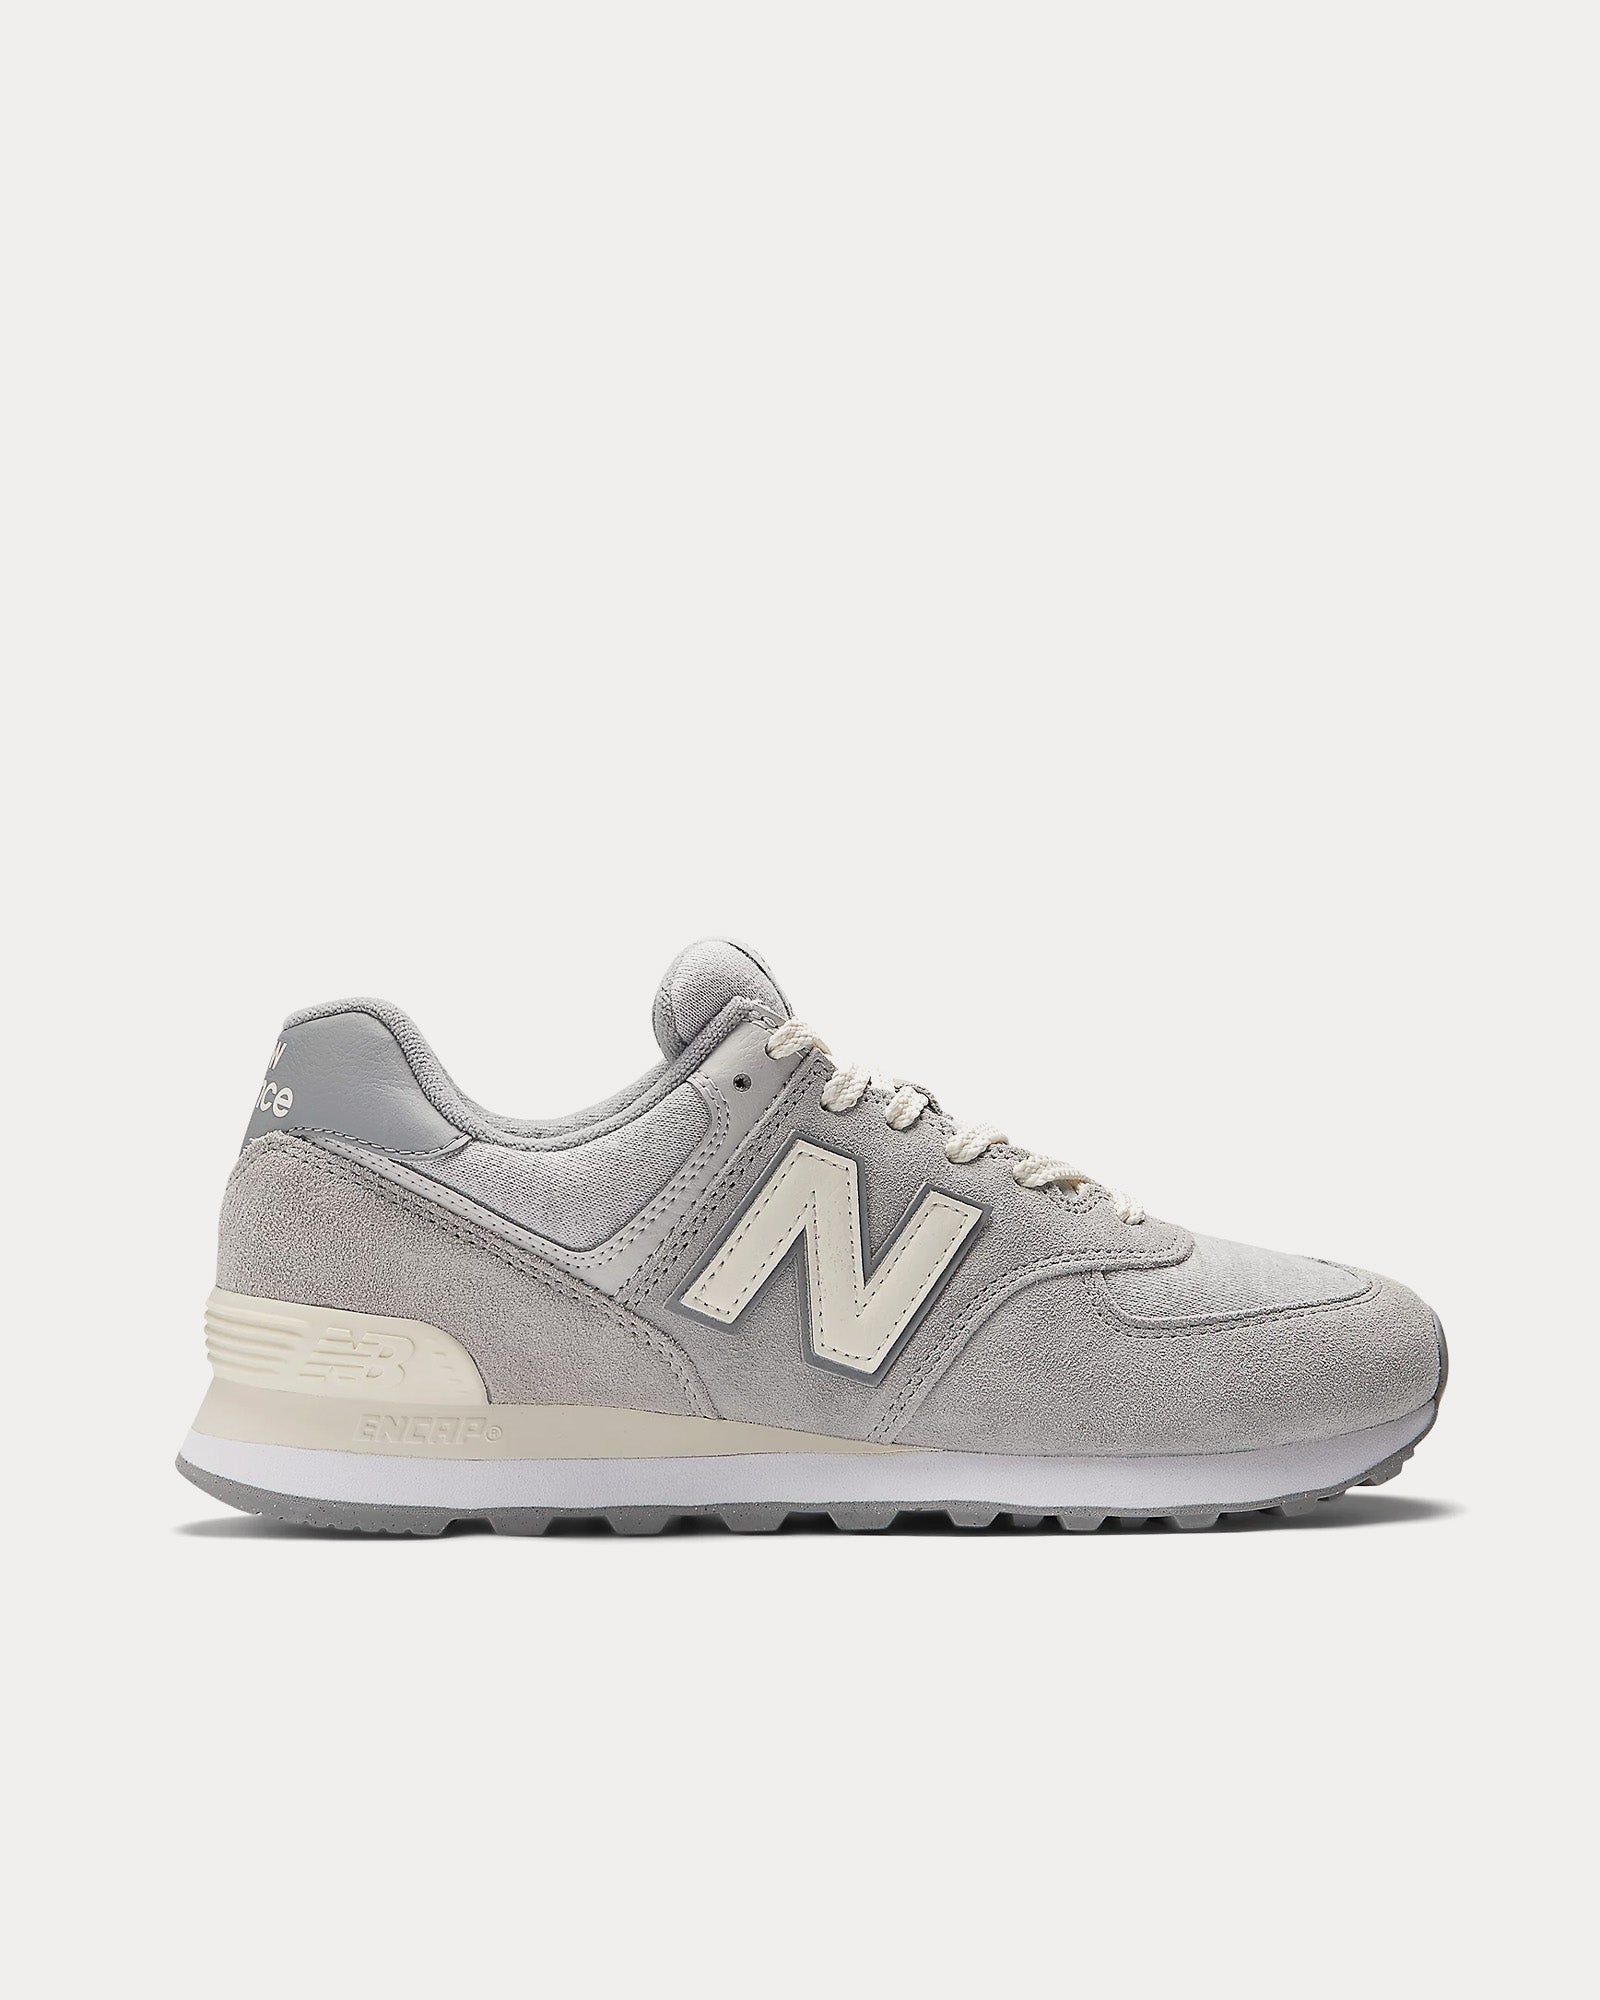 New Balance - 574 Concrete / Angora / Grey 002 Low Top Sneakers